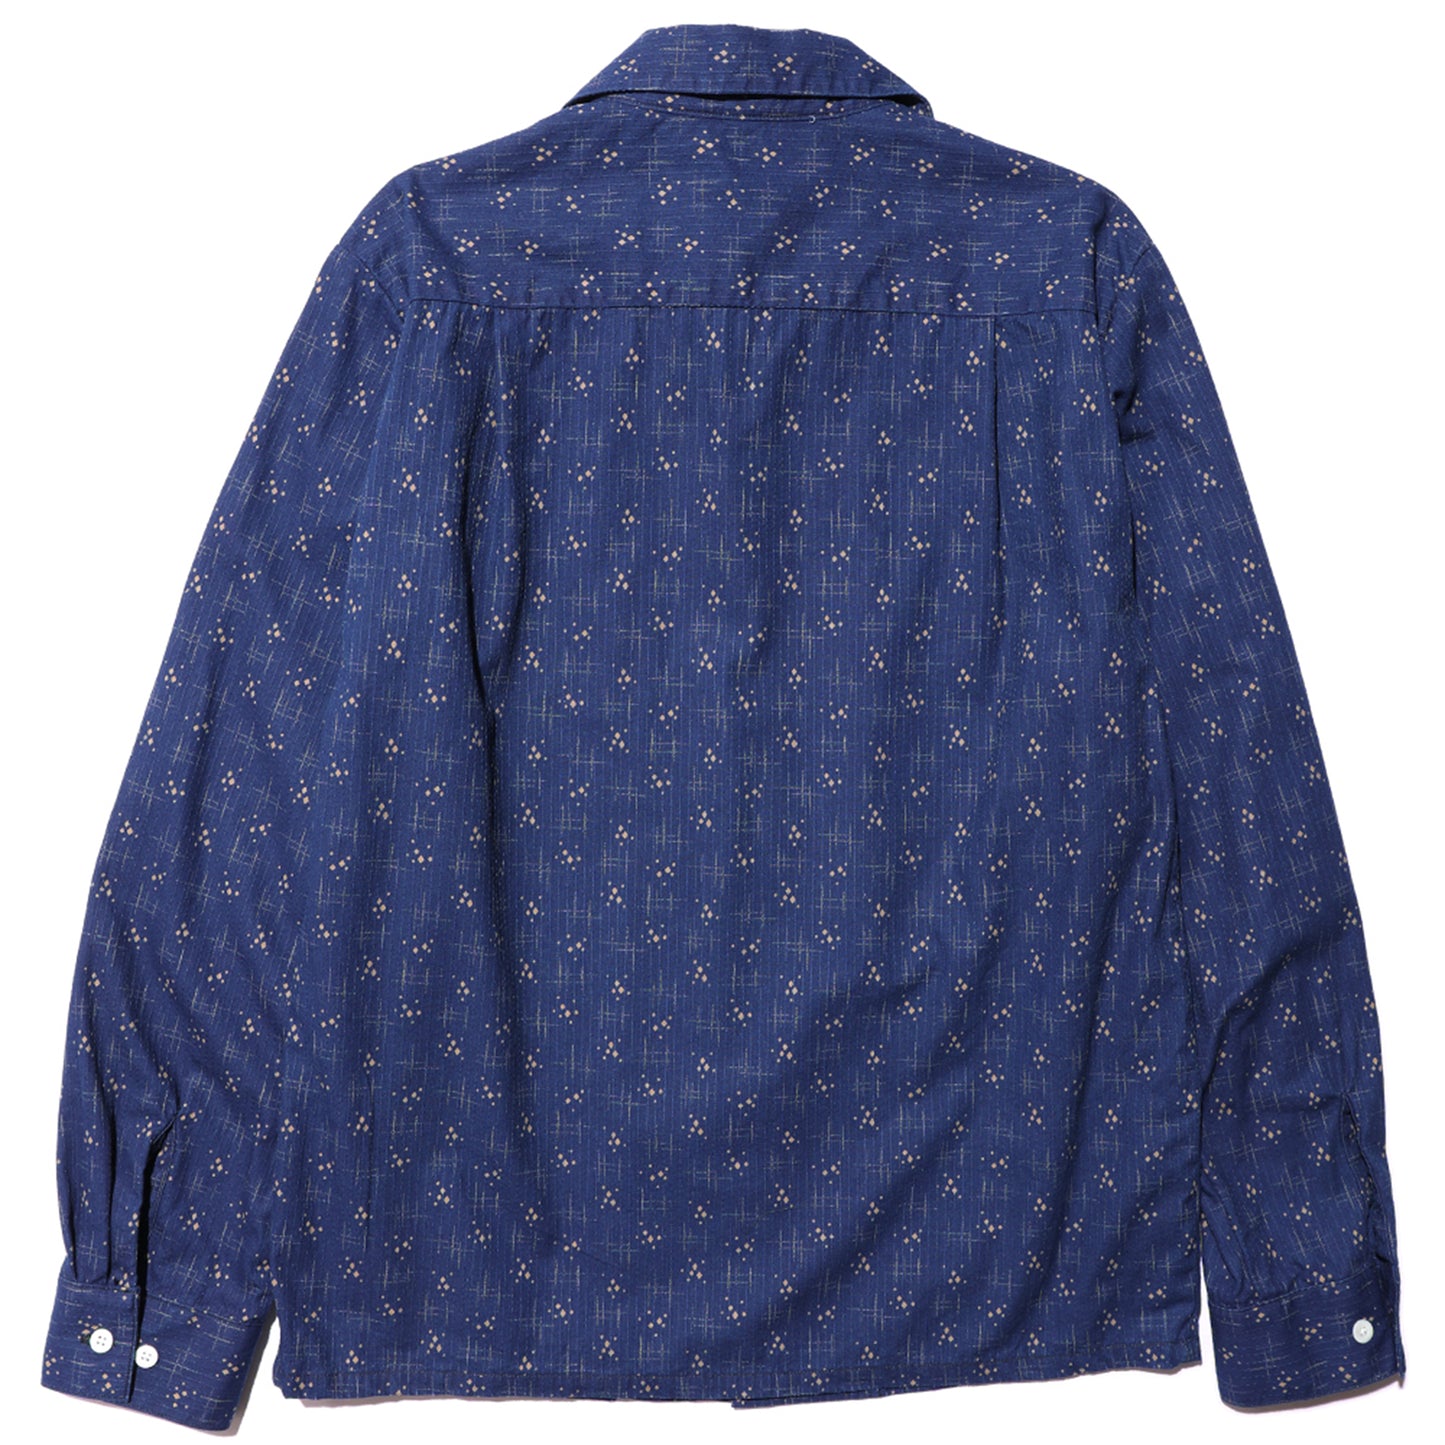 JELADO Westcoast shirt Sashiko(ウェストコーストシャツ刺し子)【SG72107】